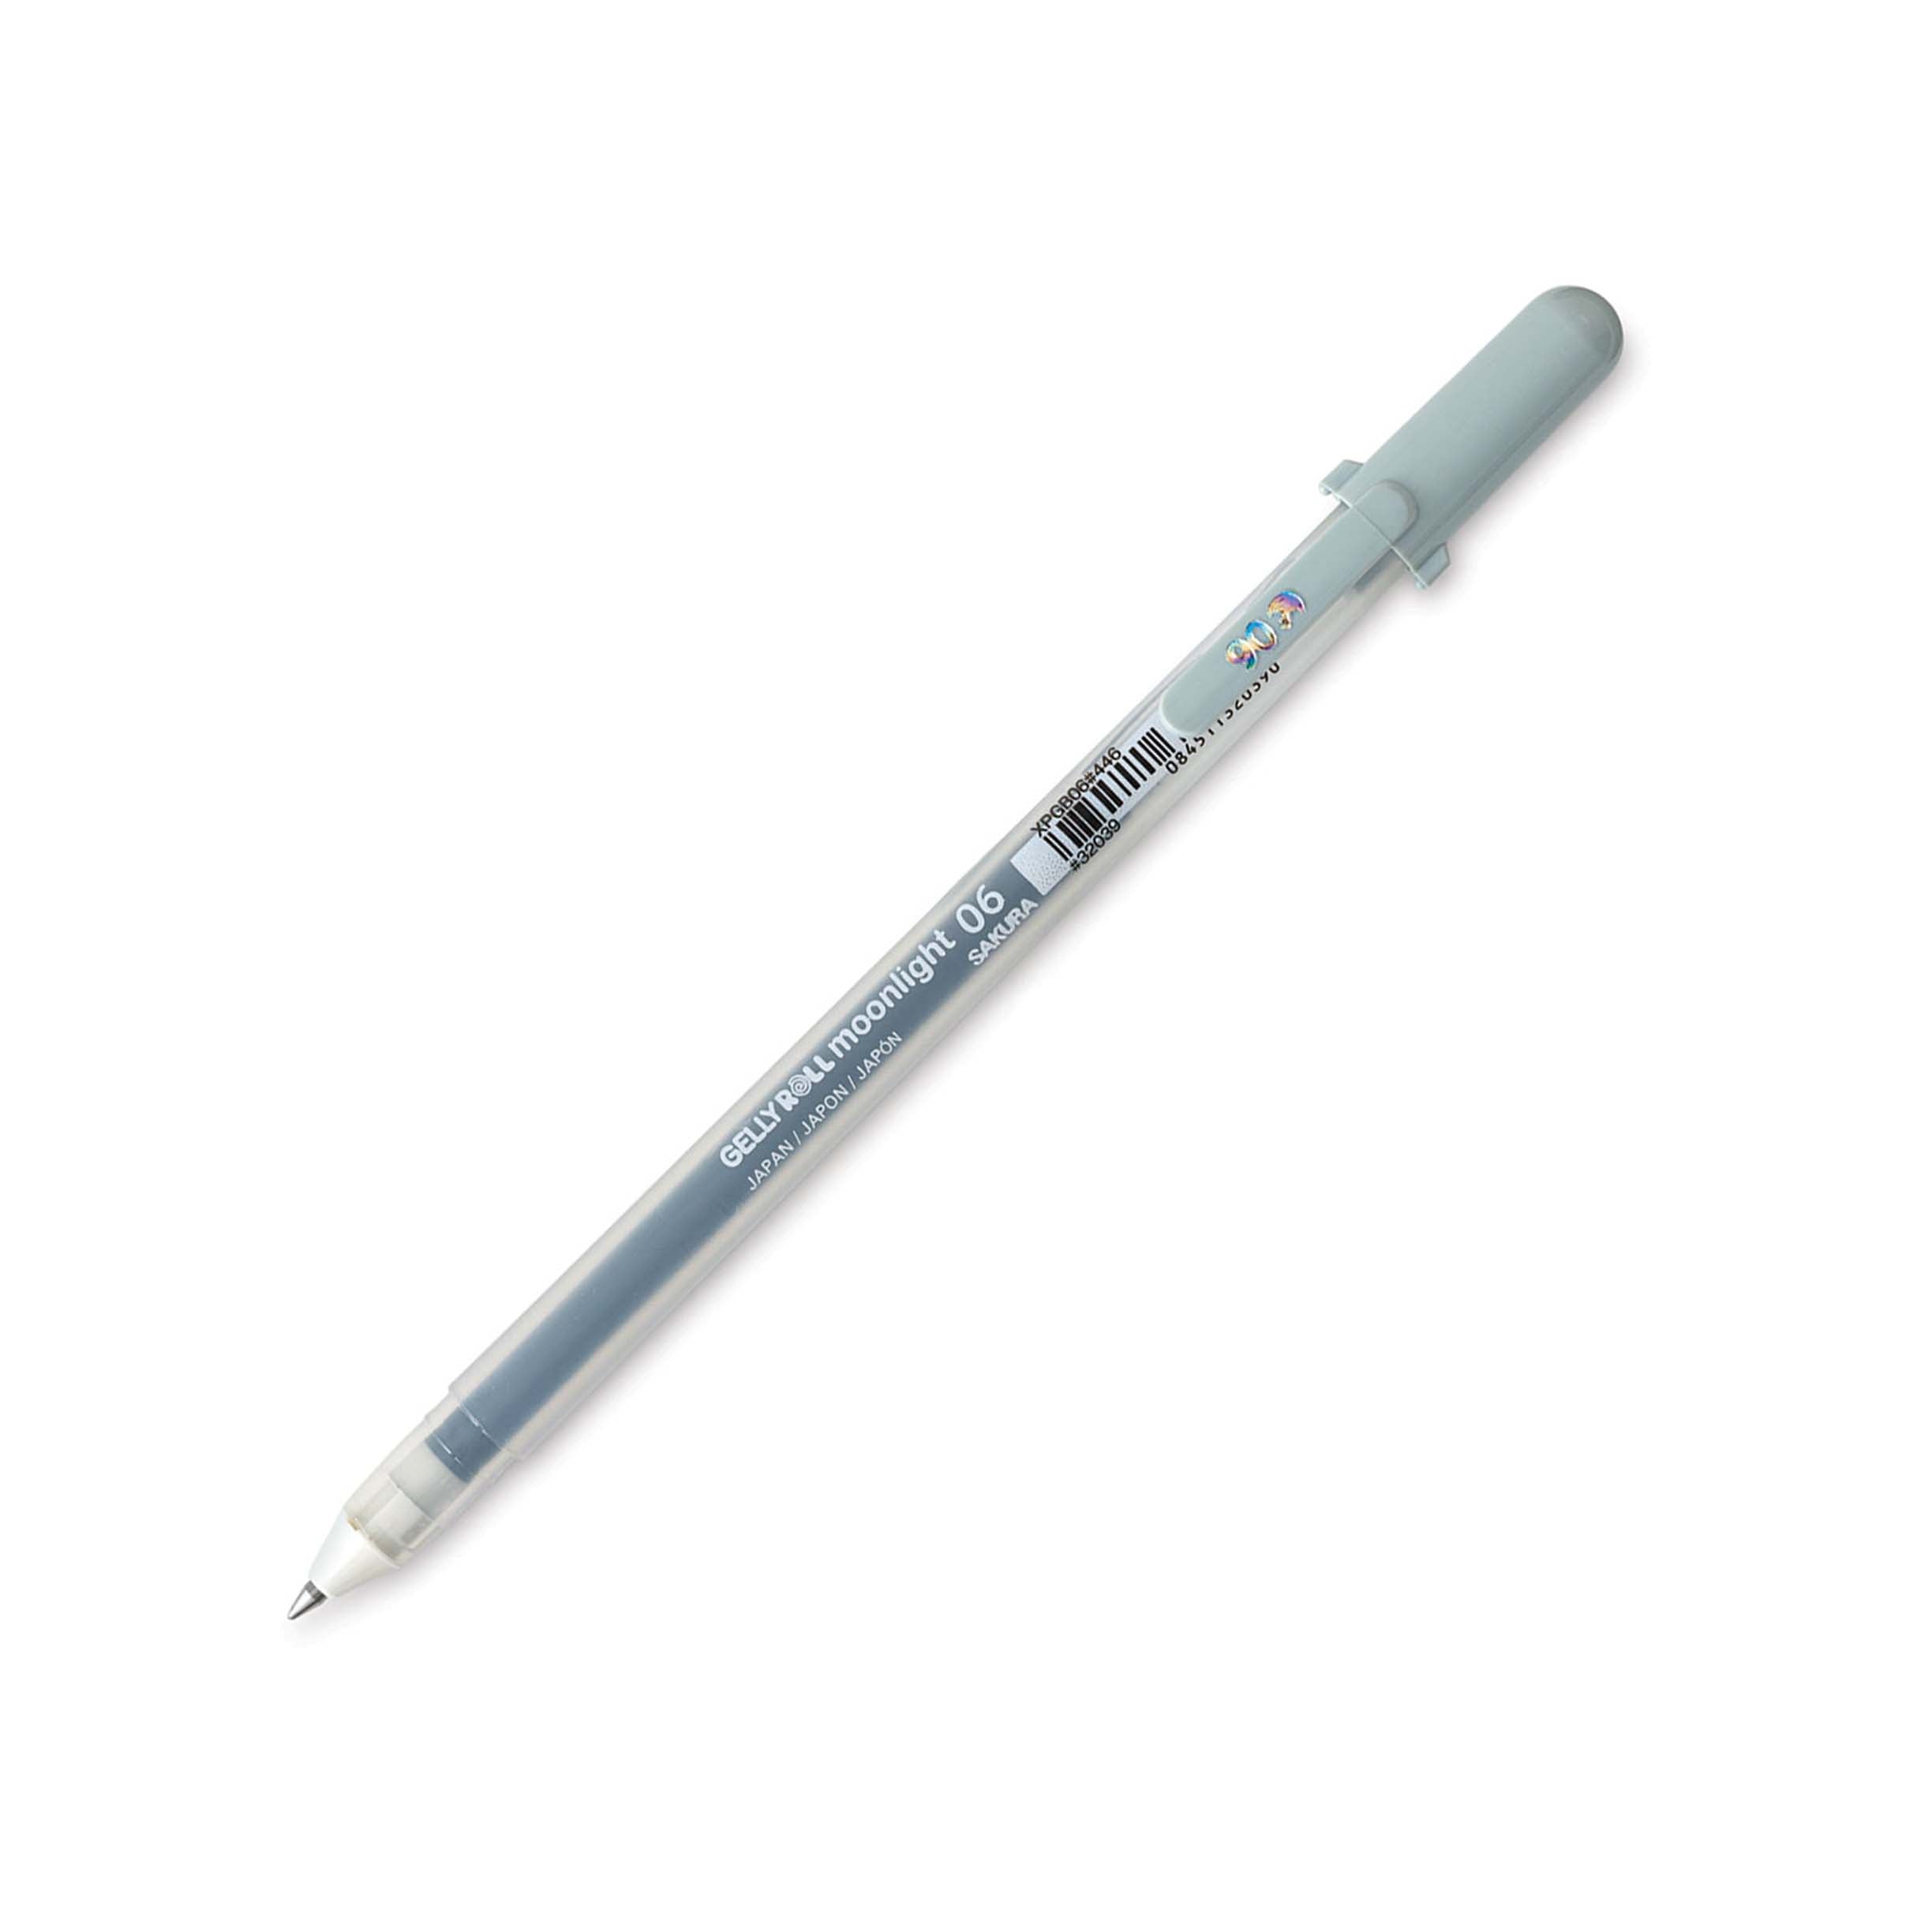 Sakura Gelly Roll Moonlight Pastel + White - 6 Pens/Pack – 1